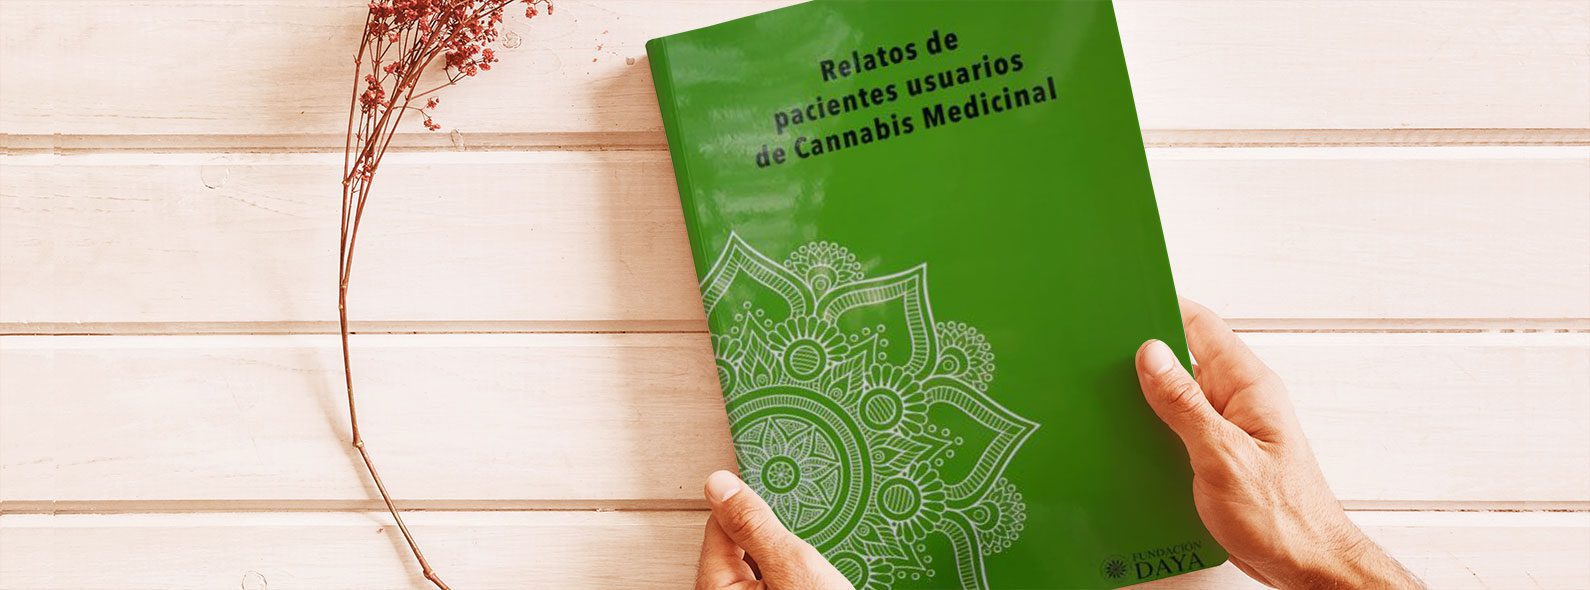 Stories of patients who use medicinal cannabis, from Fundación Daya